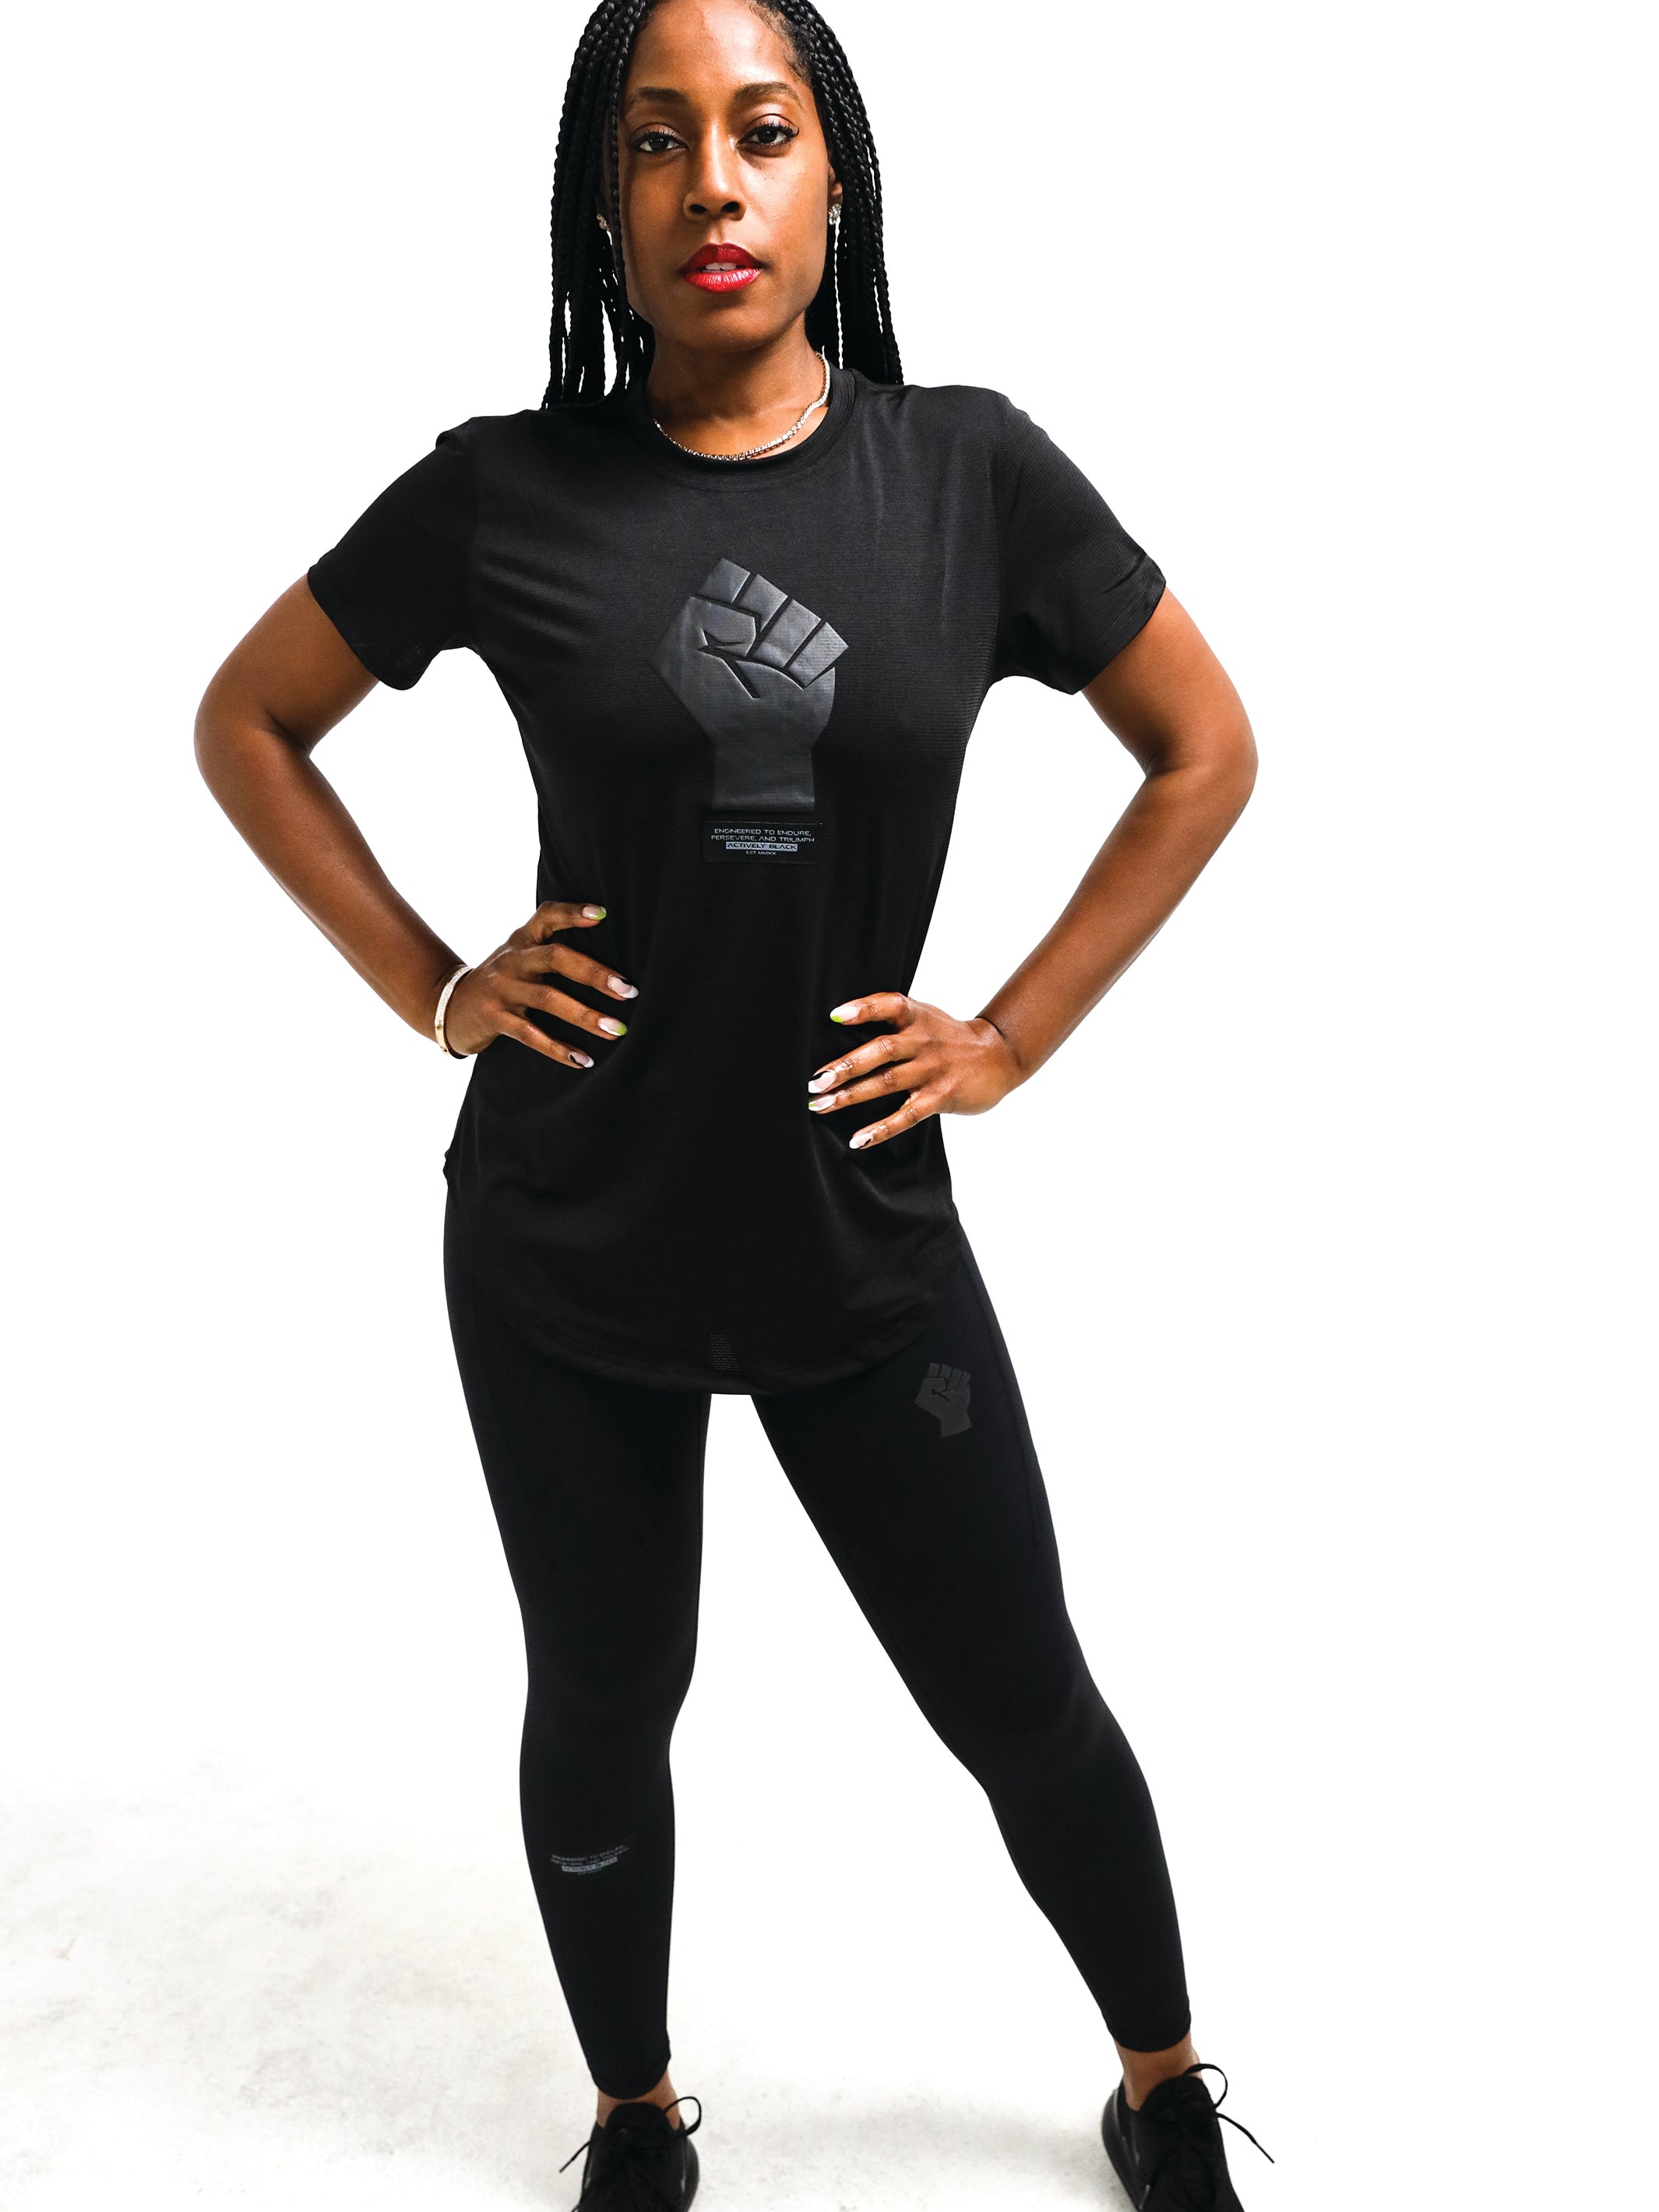 Women's Black Fist Performance Shirt